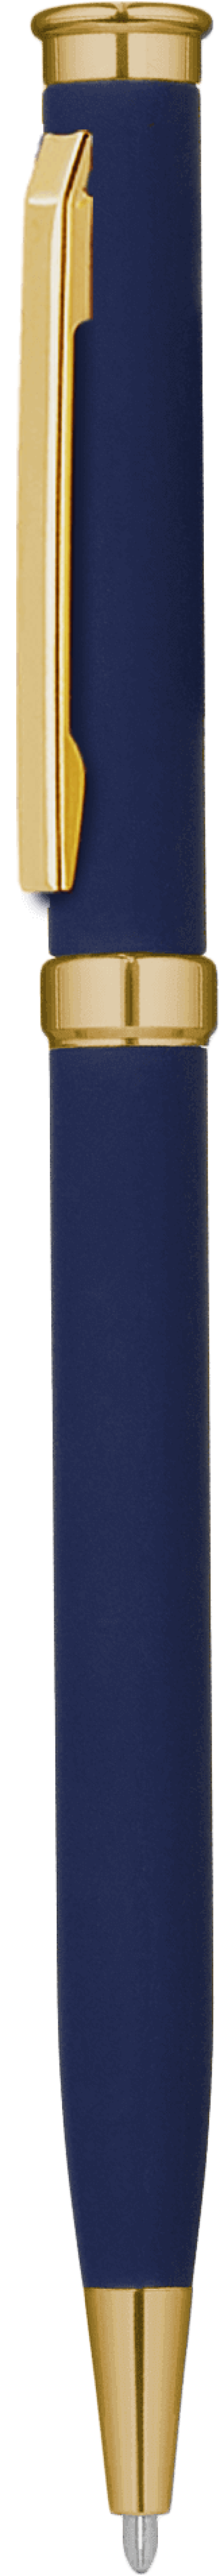 Ручка METEOR SOFT GOLD MIRROR Темно-синяя 1130.14